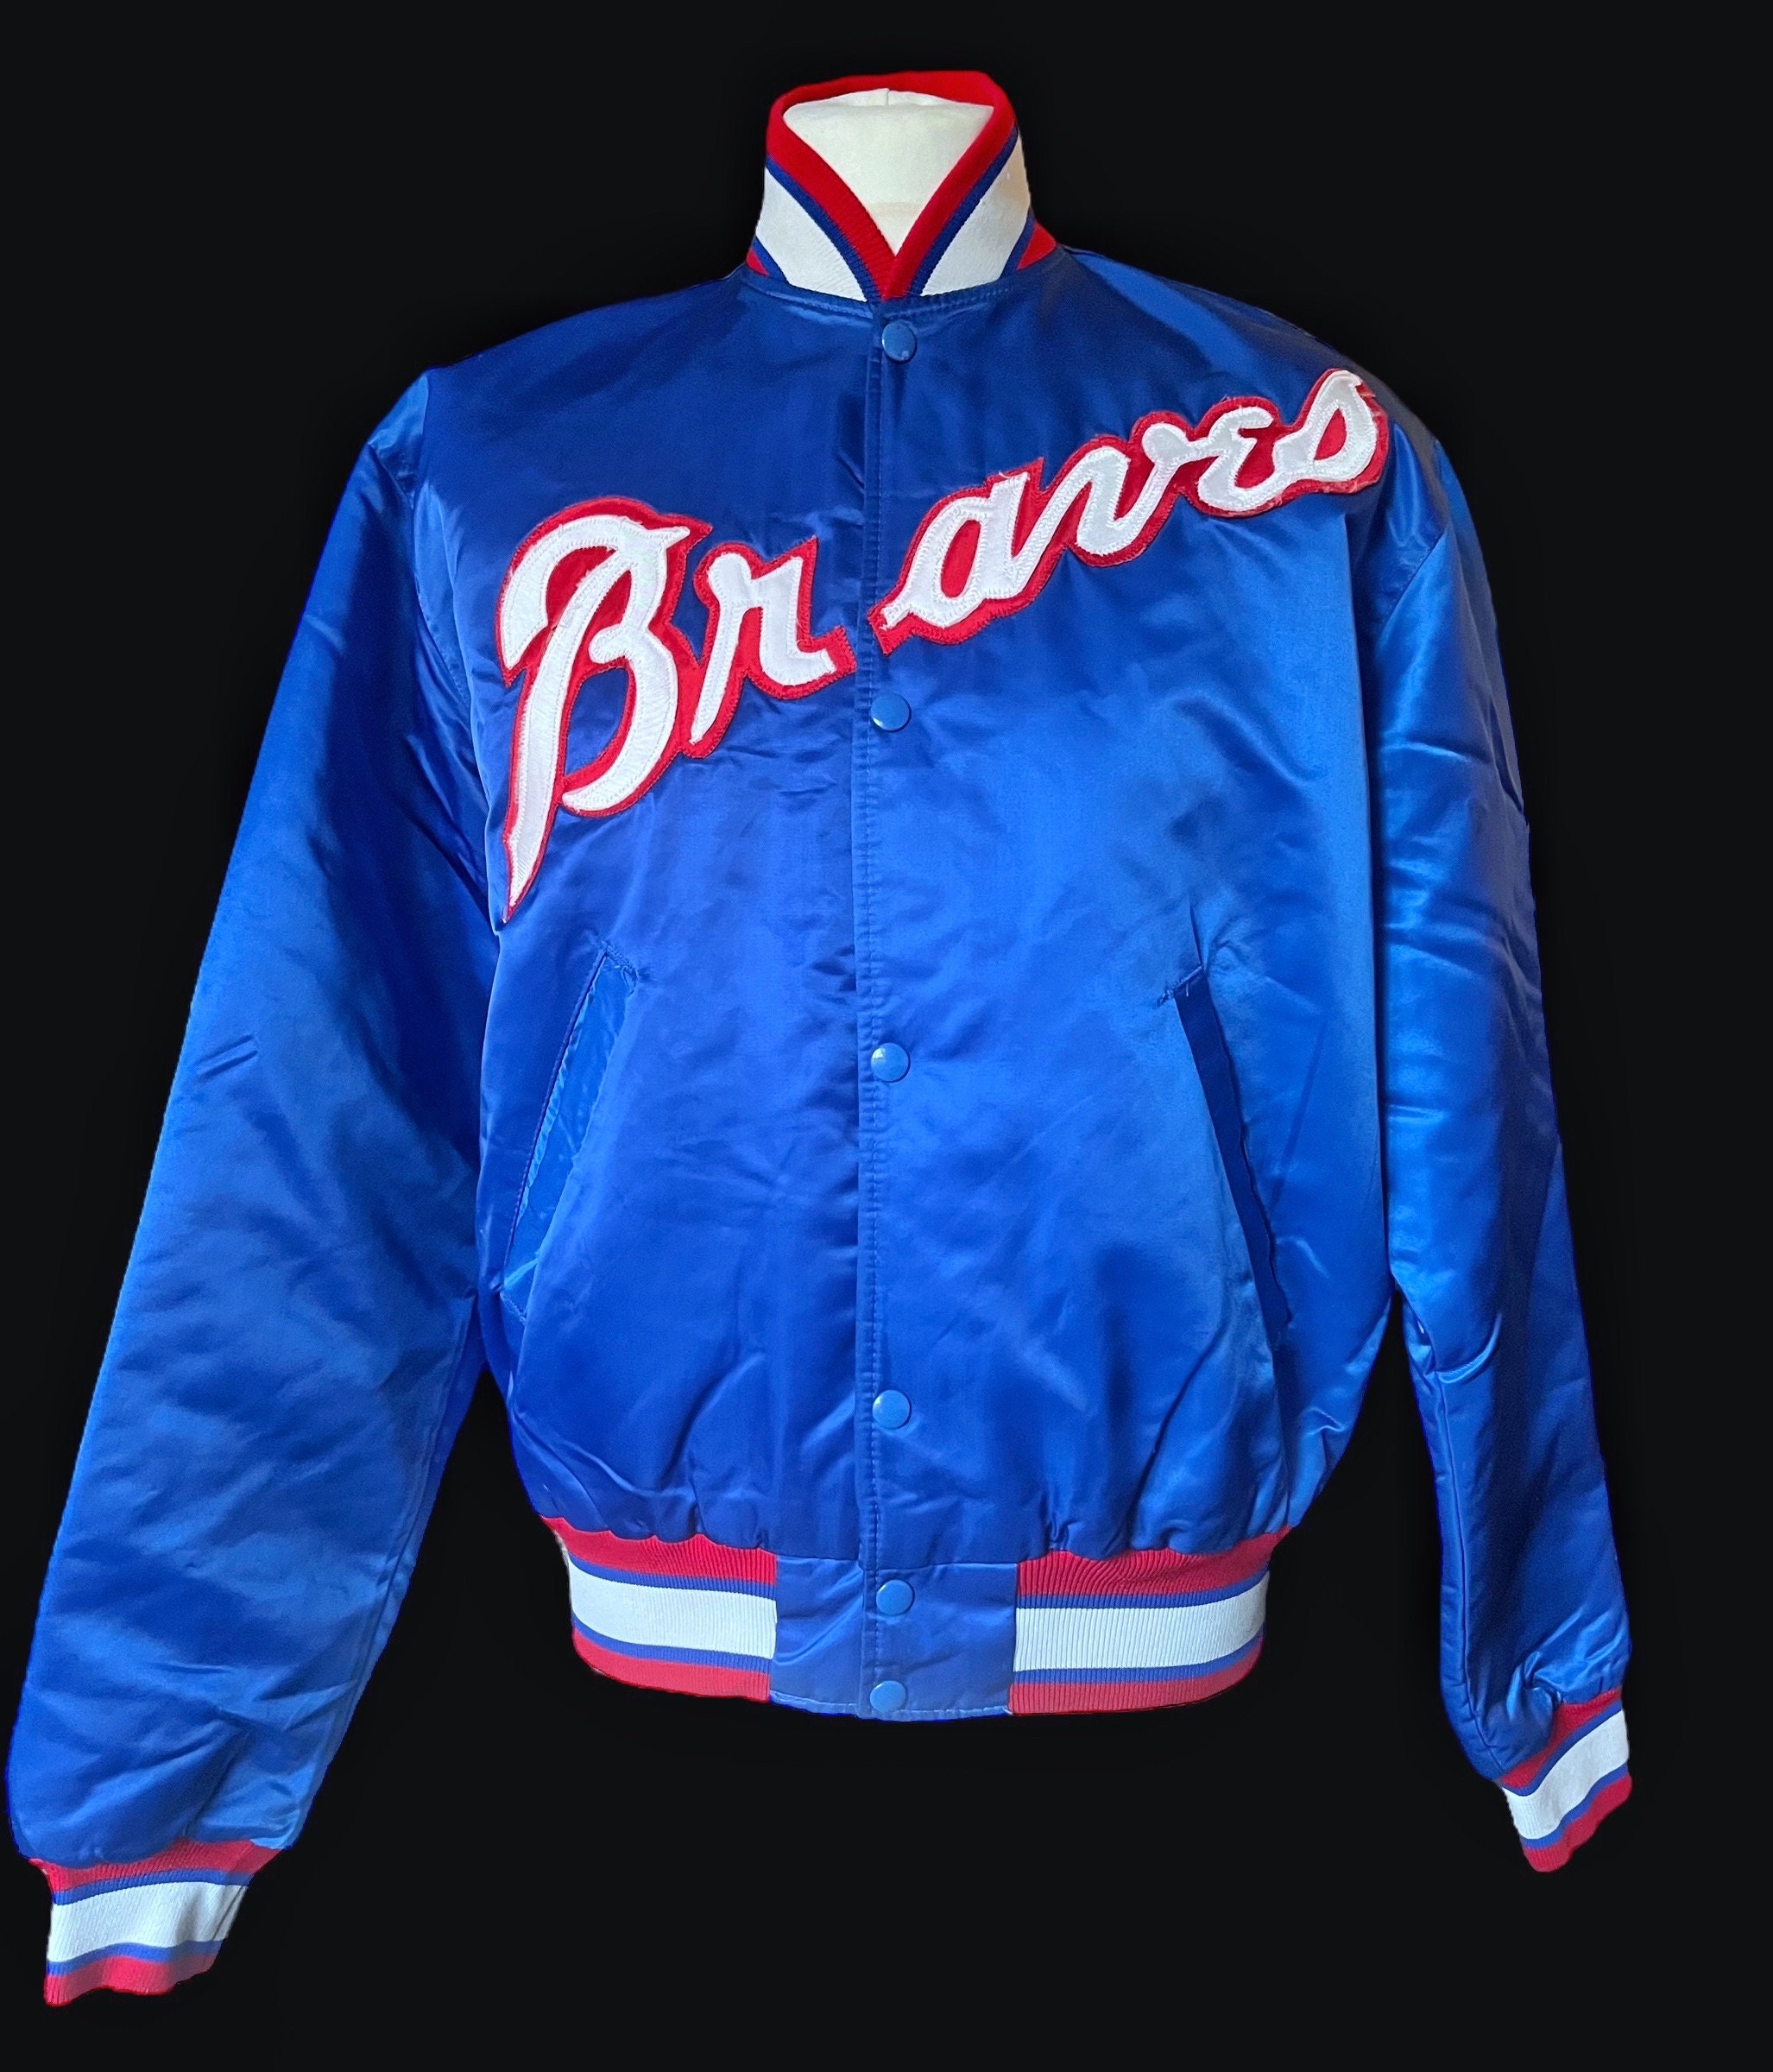 BEST Atlanta Braves American League Baseball Vintage Pattern Varsity Jacket